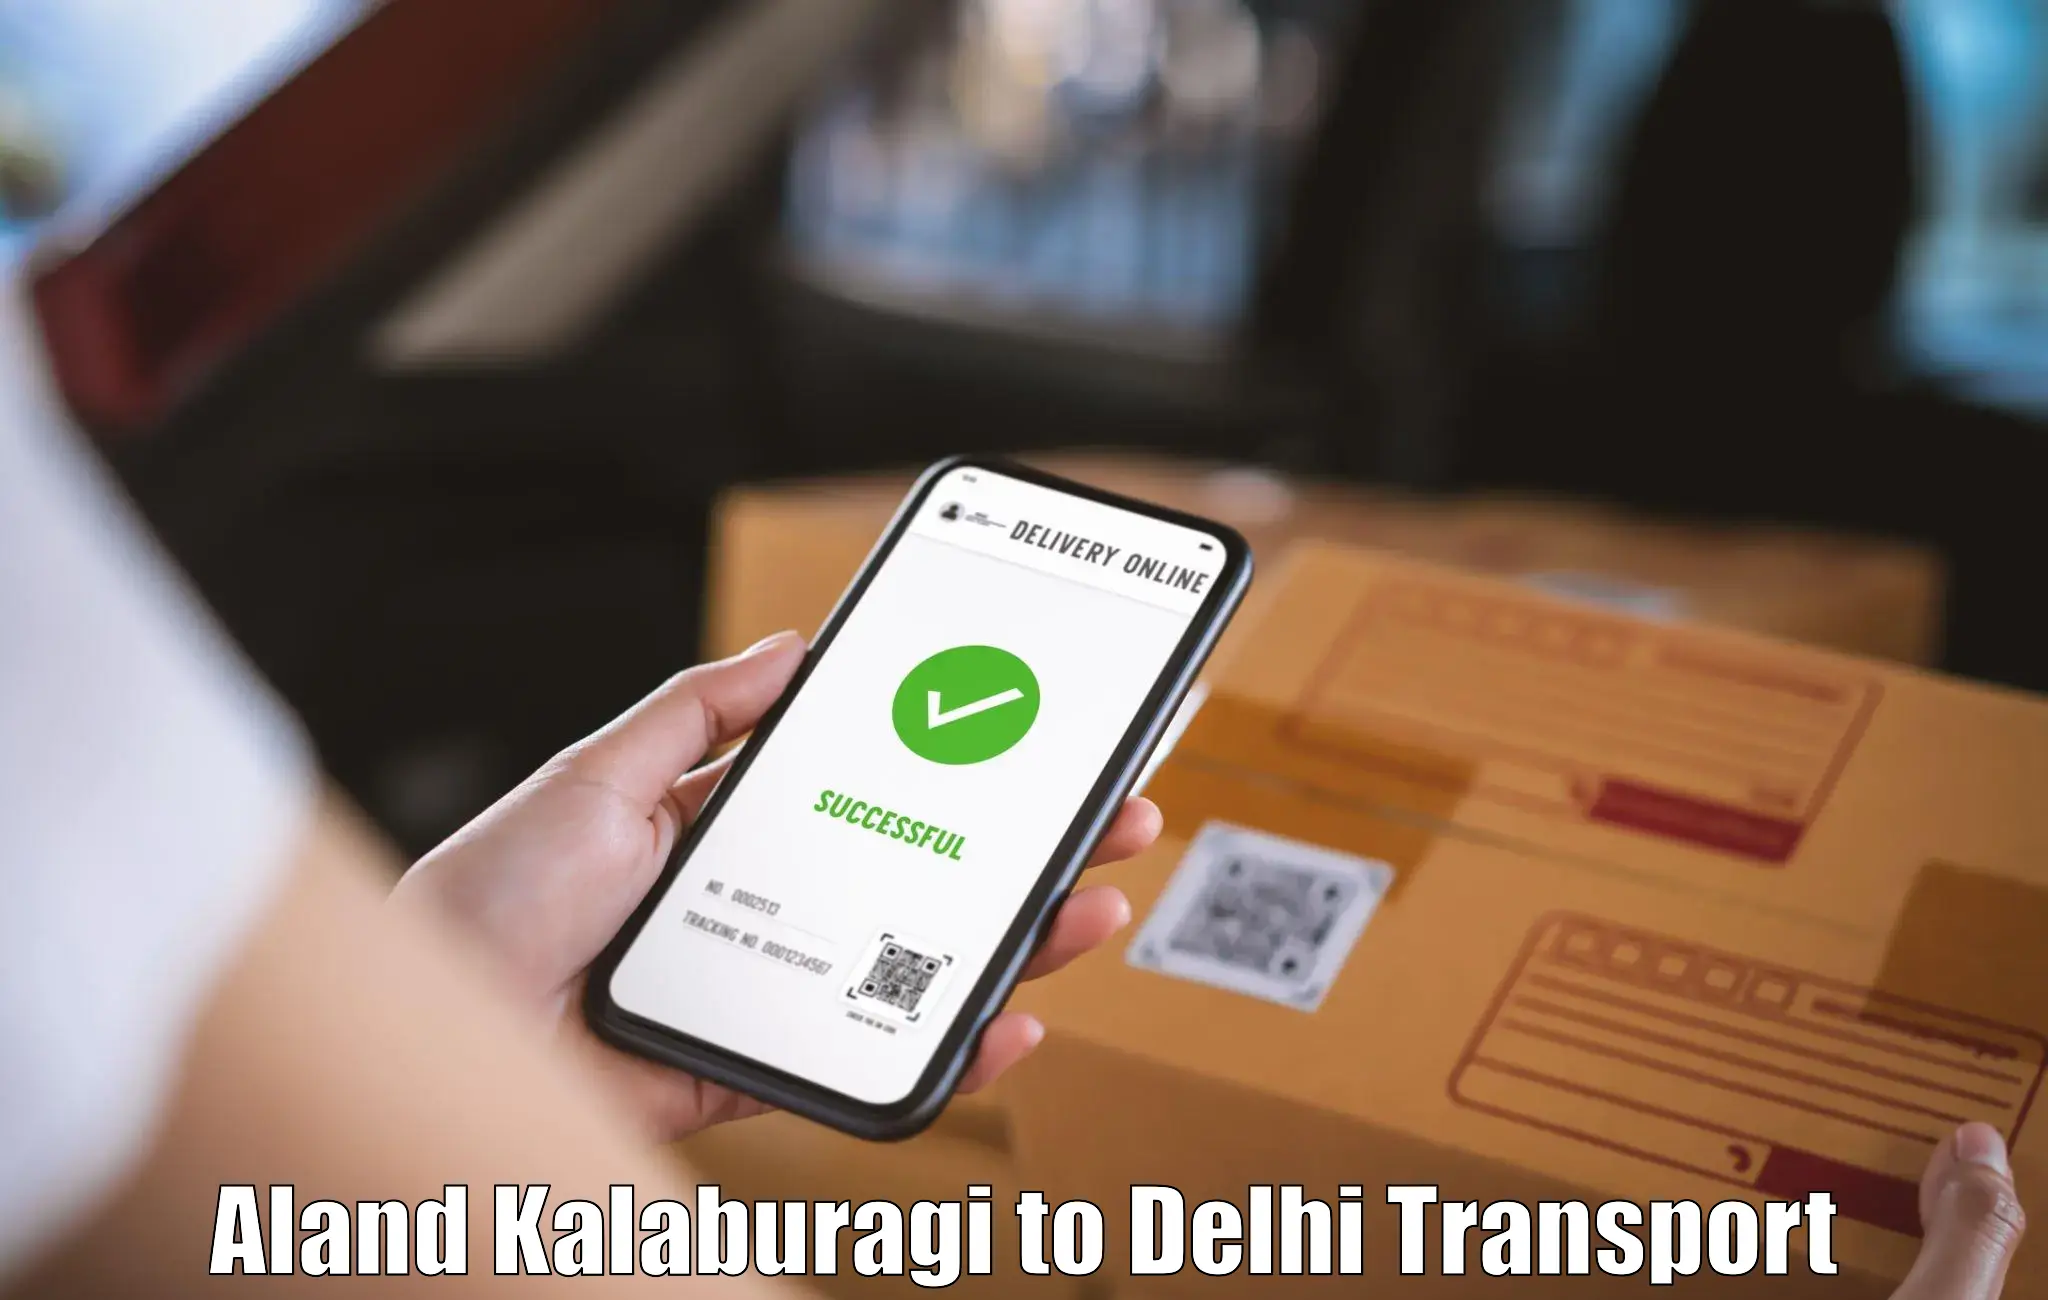 Truck transport companies in India Aland Kalaburagi to Delhi